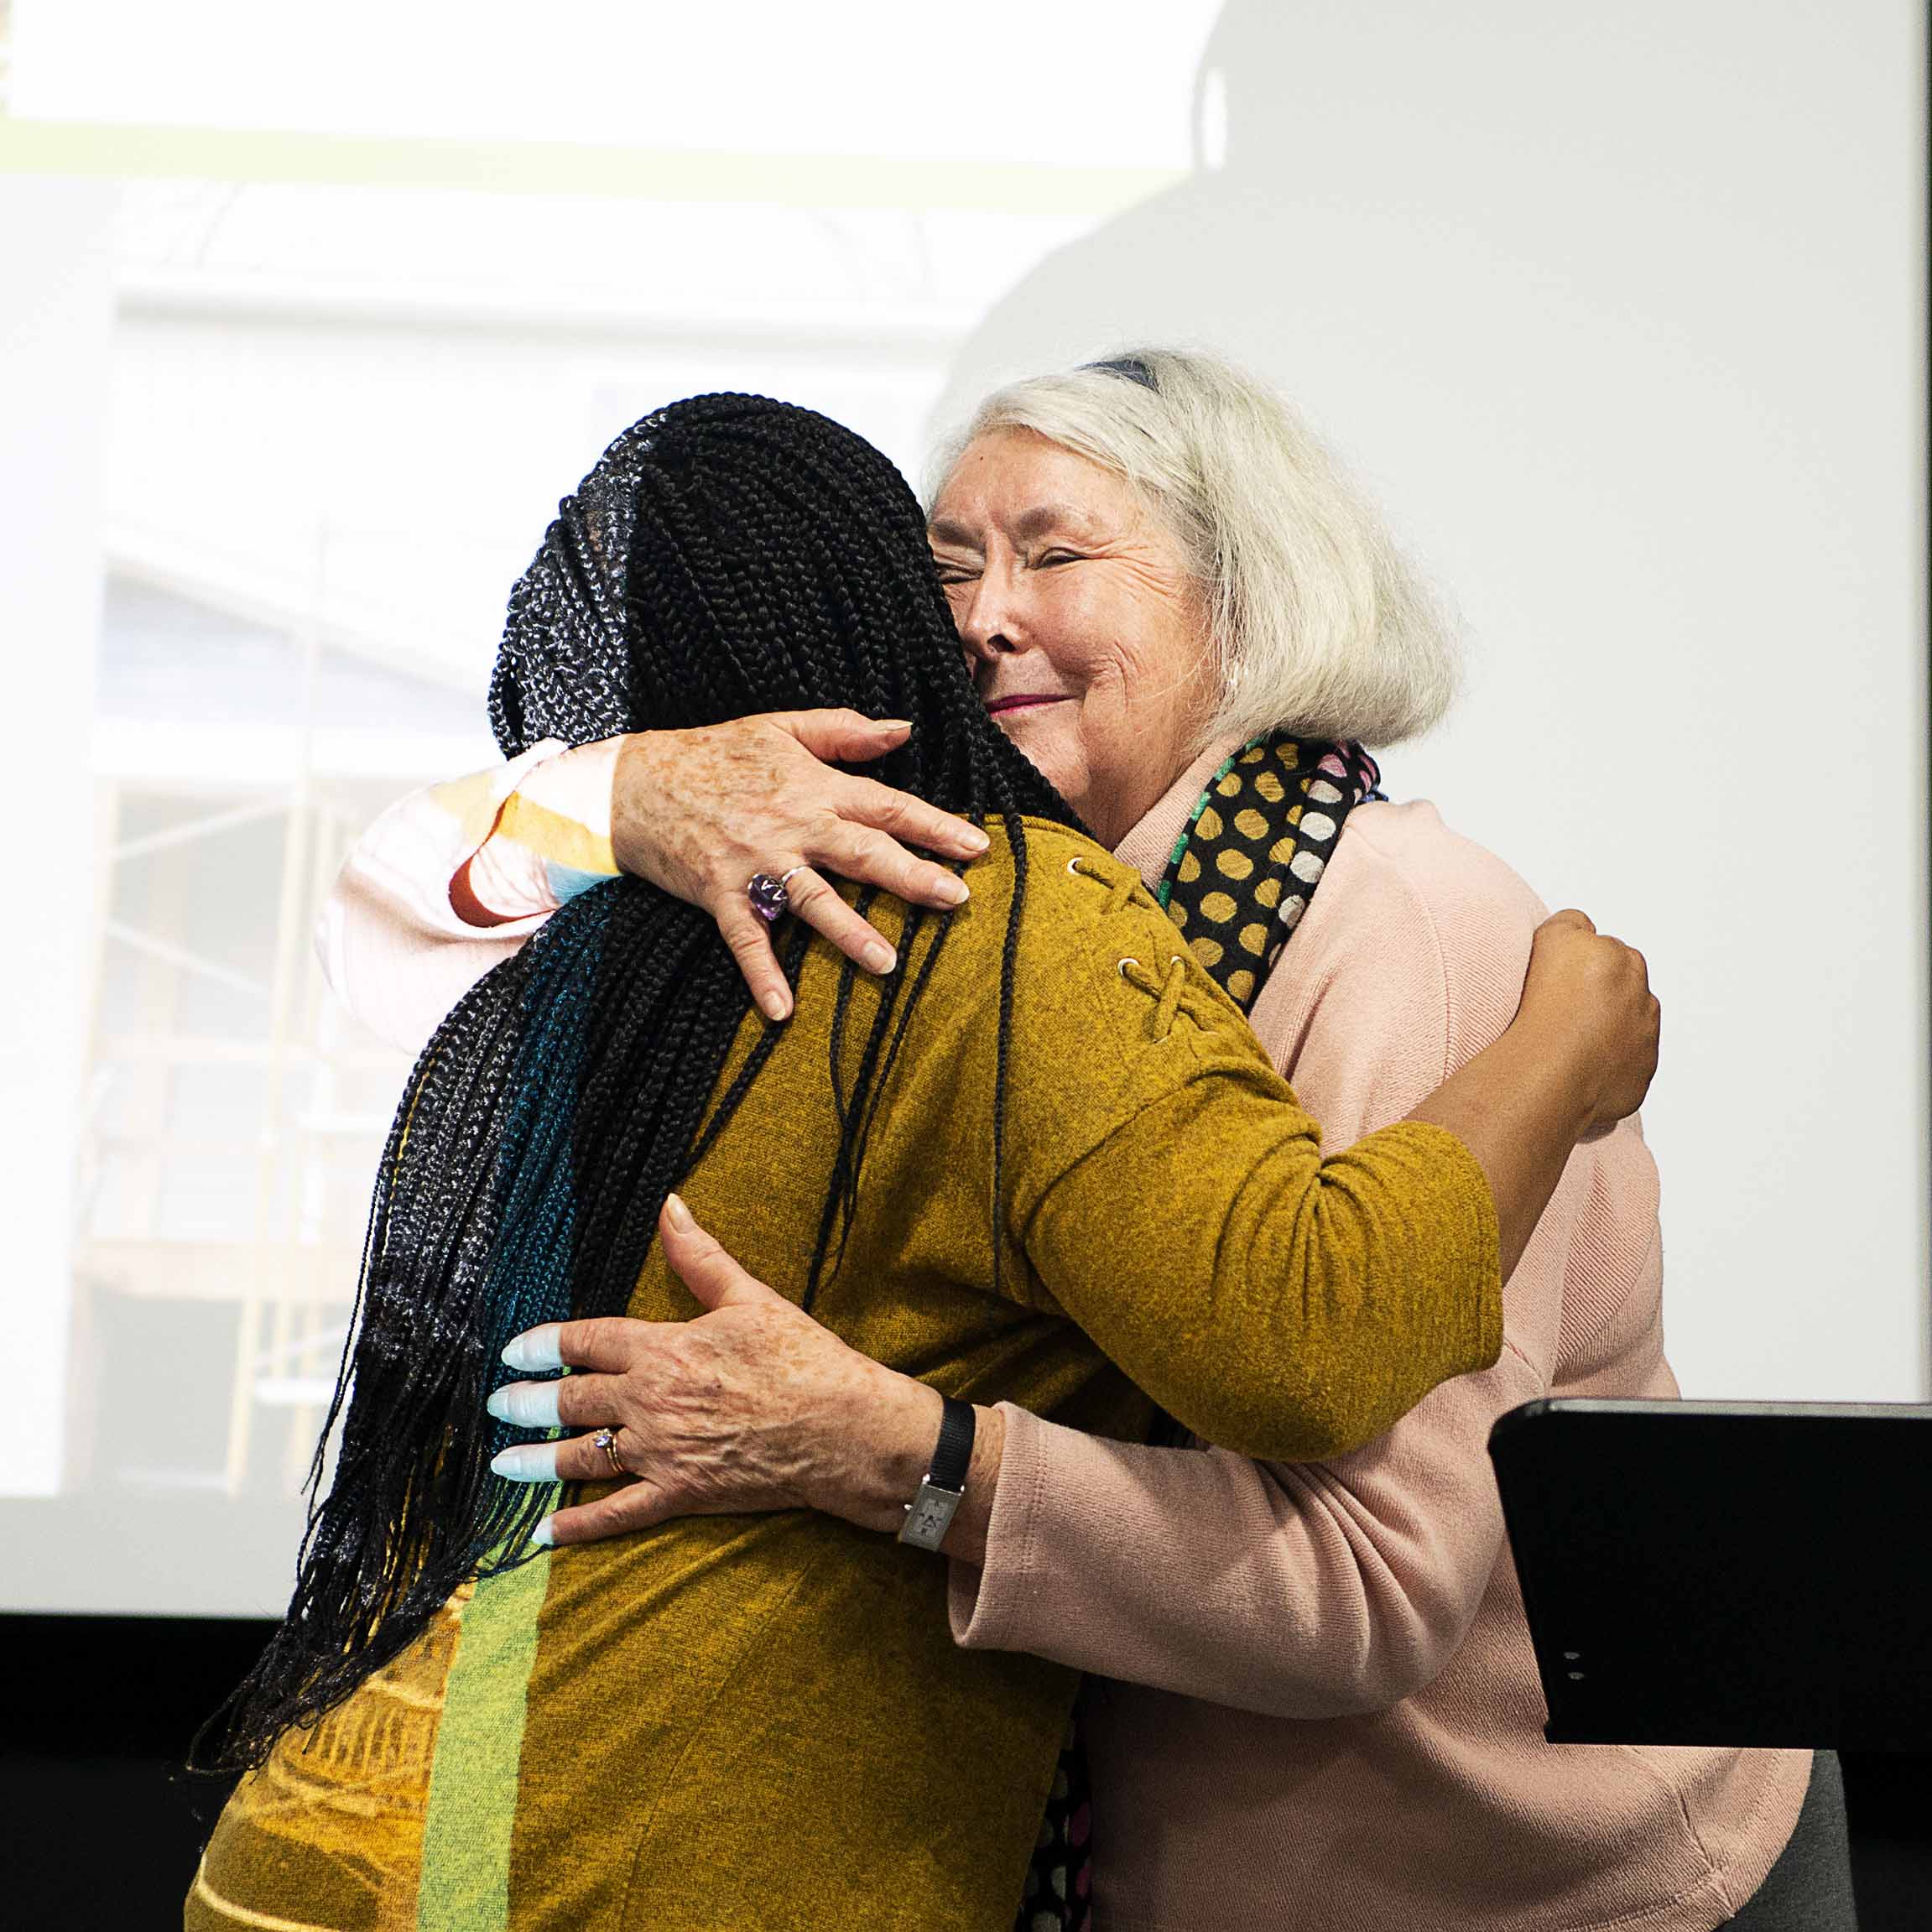 Two women share an embrace